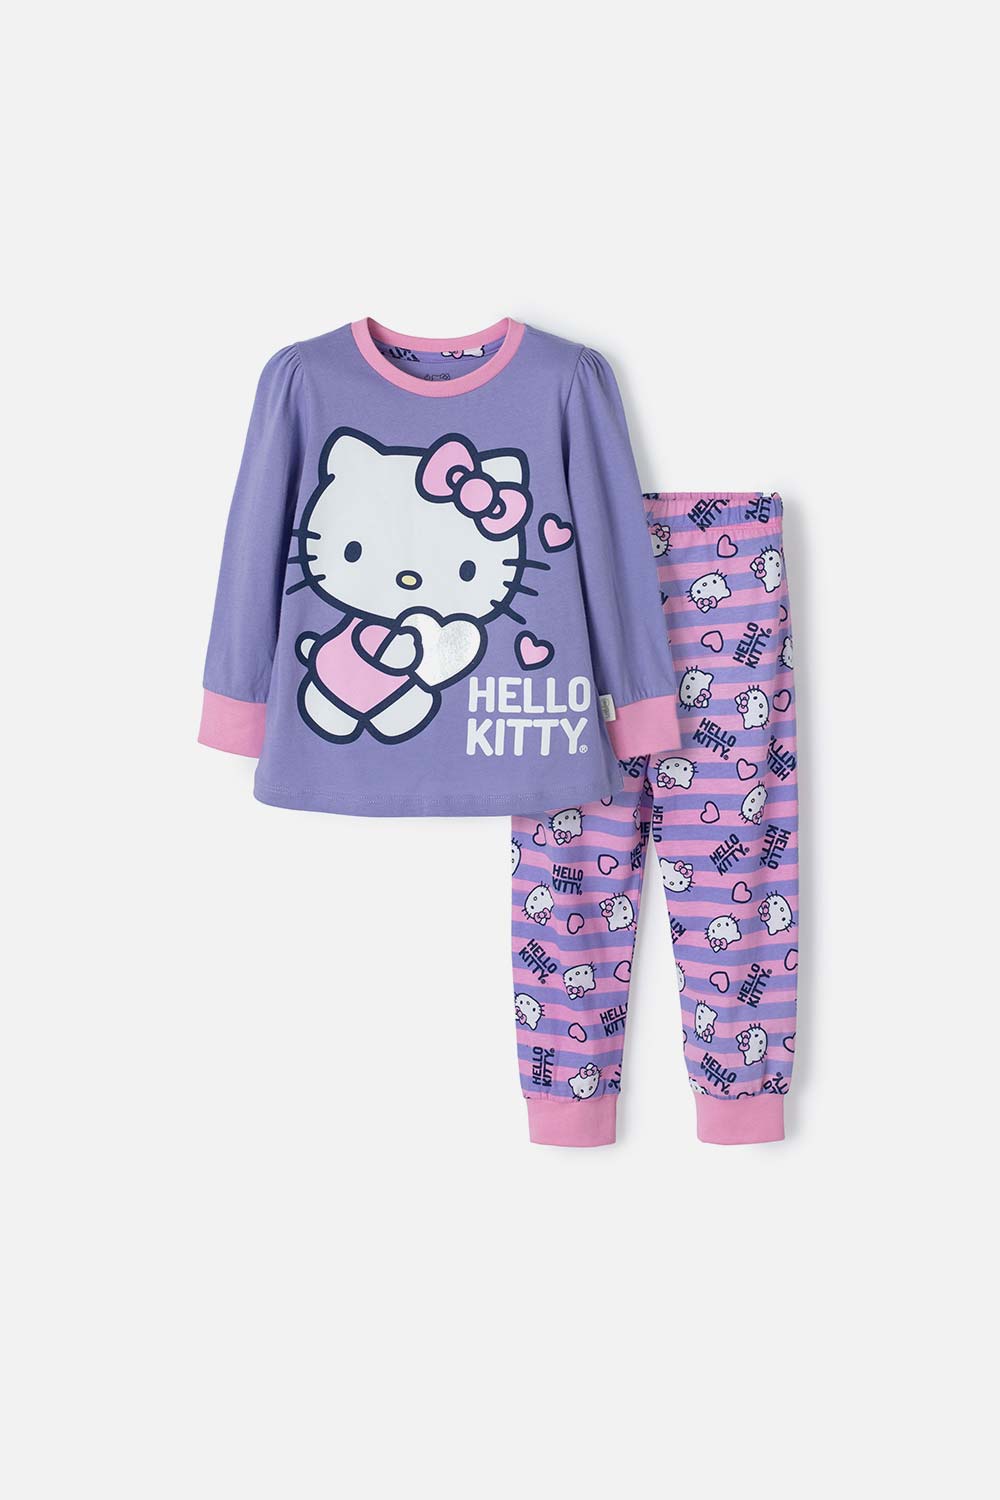 Pijama de Hello Kitty morada y rosada de camiseta manga larga para niña 2T a 5T 2T-0